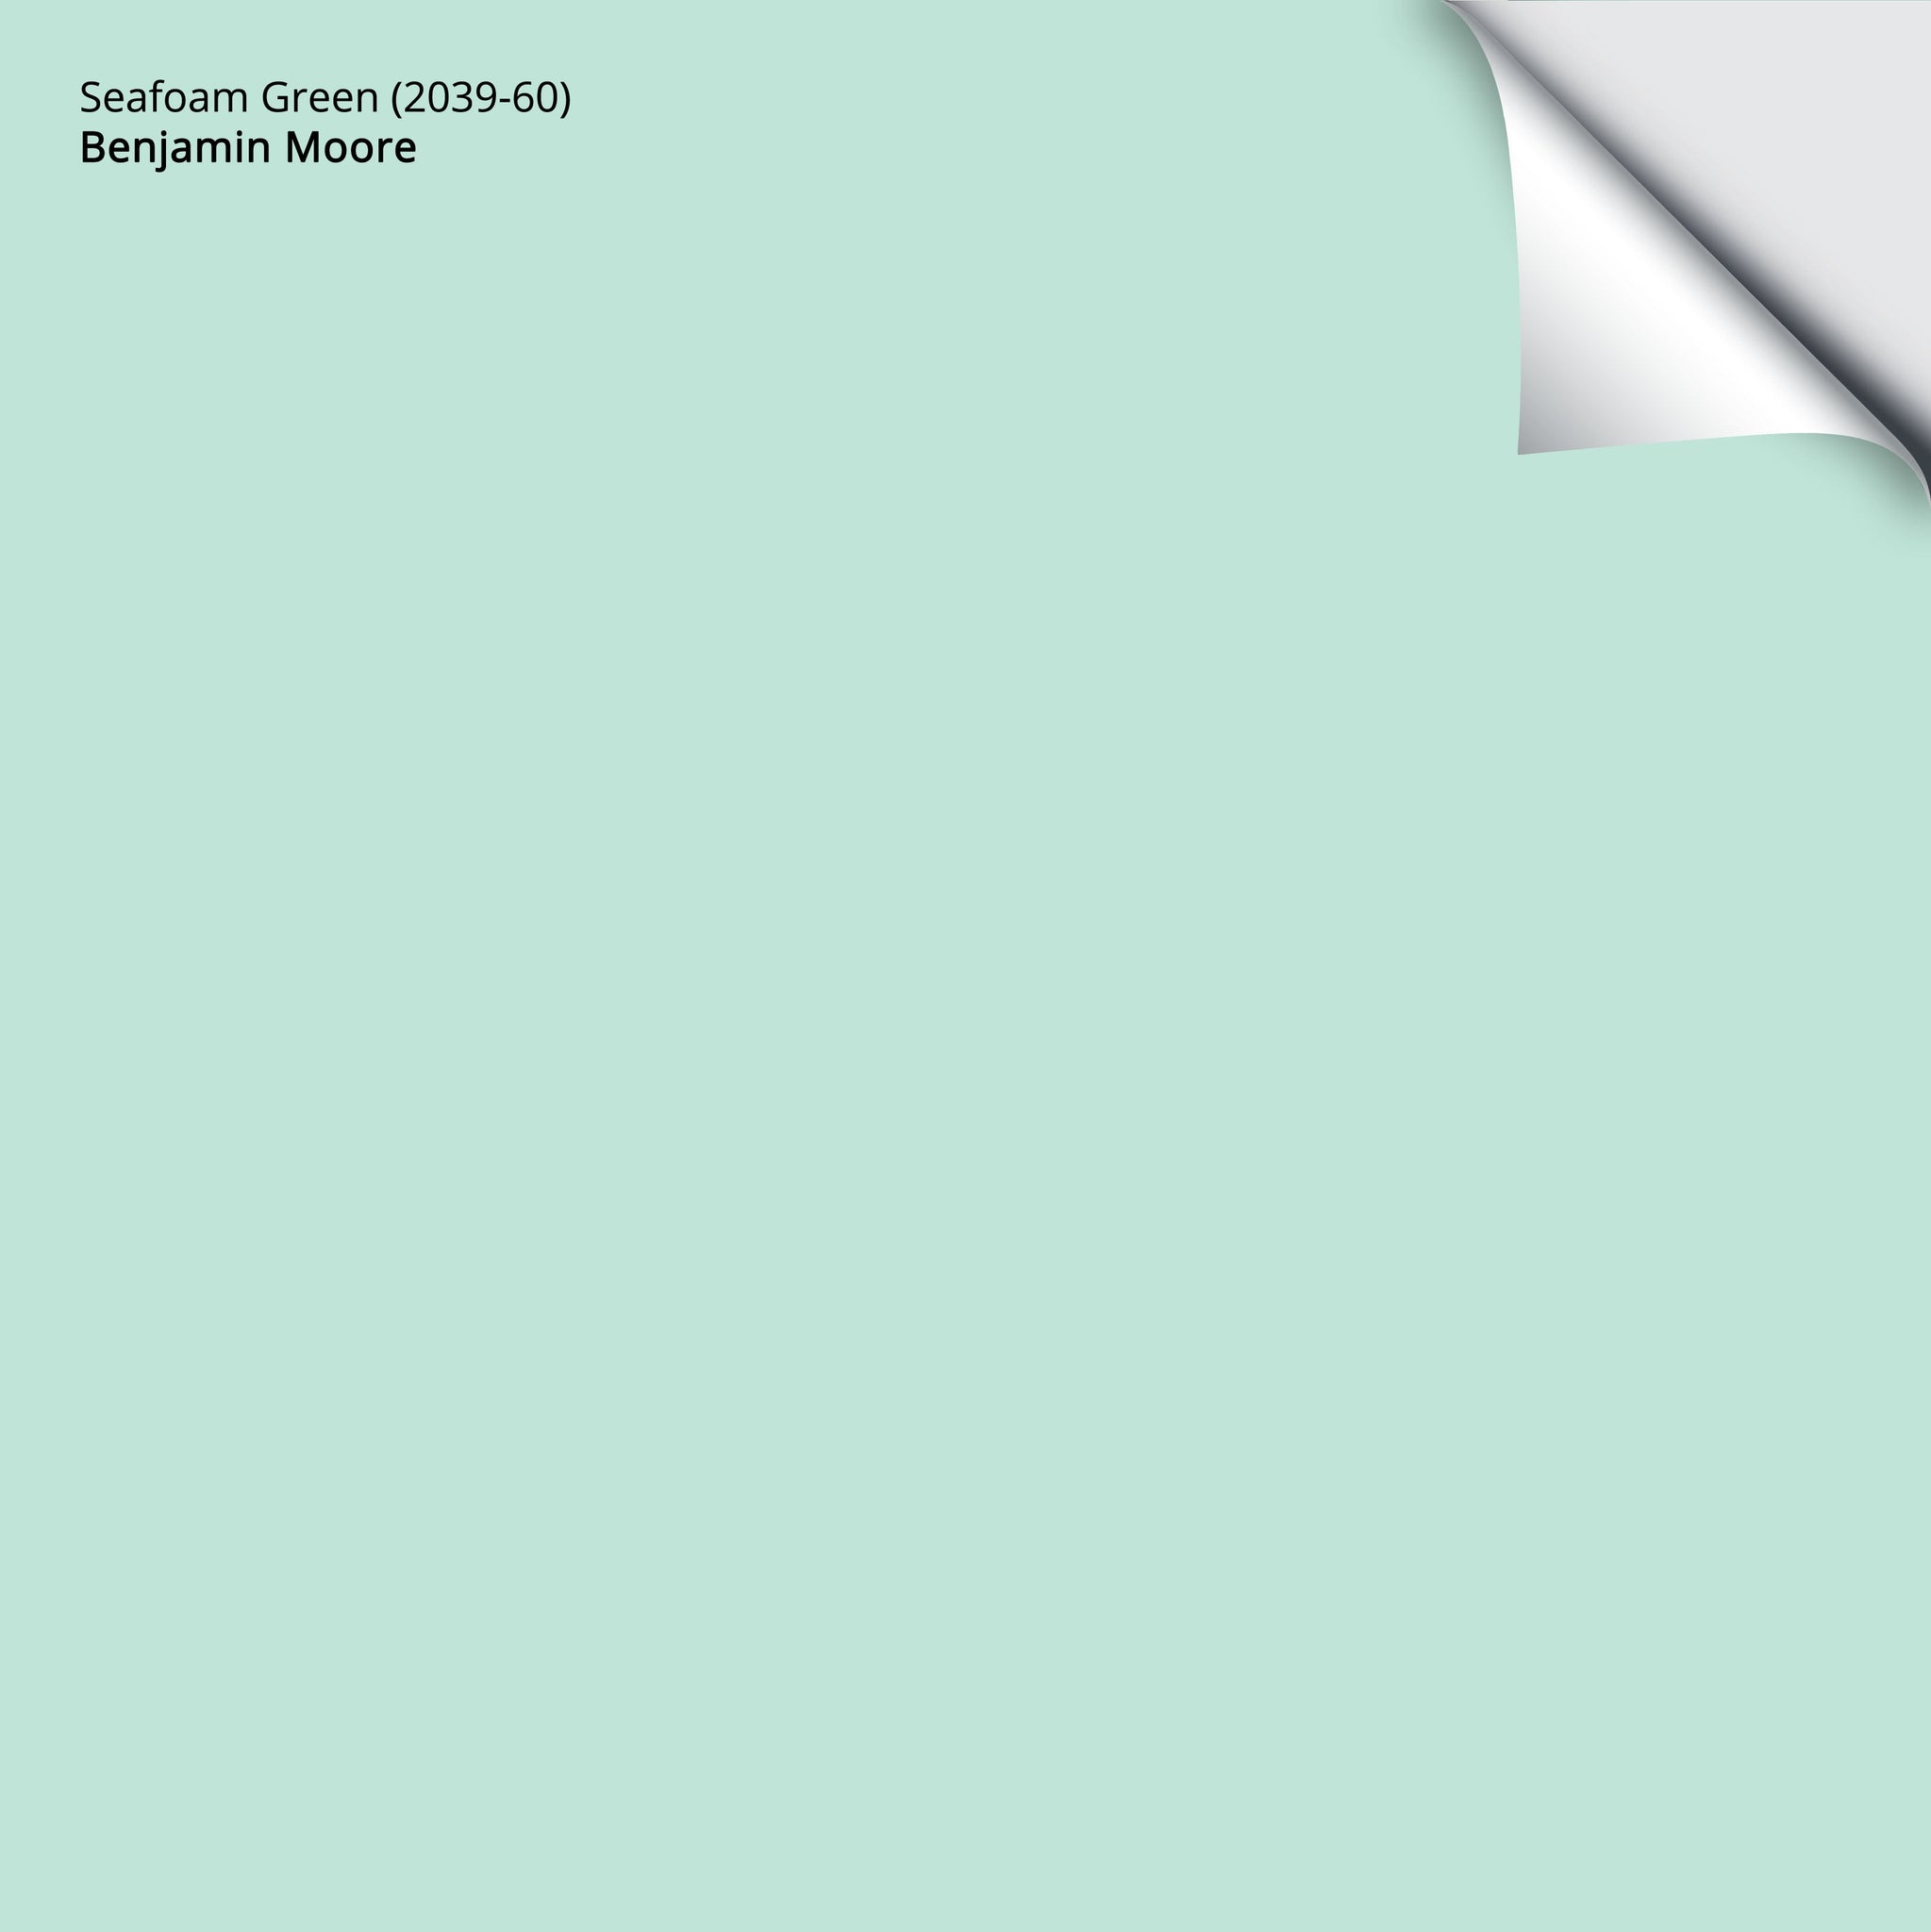 Fatigue Green (2140-10): 9x14.75 – Benjamin Moore x Samplize